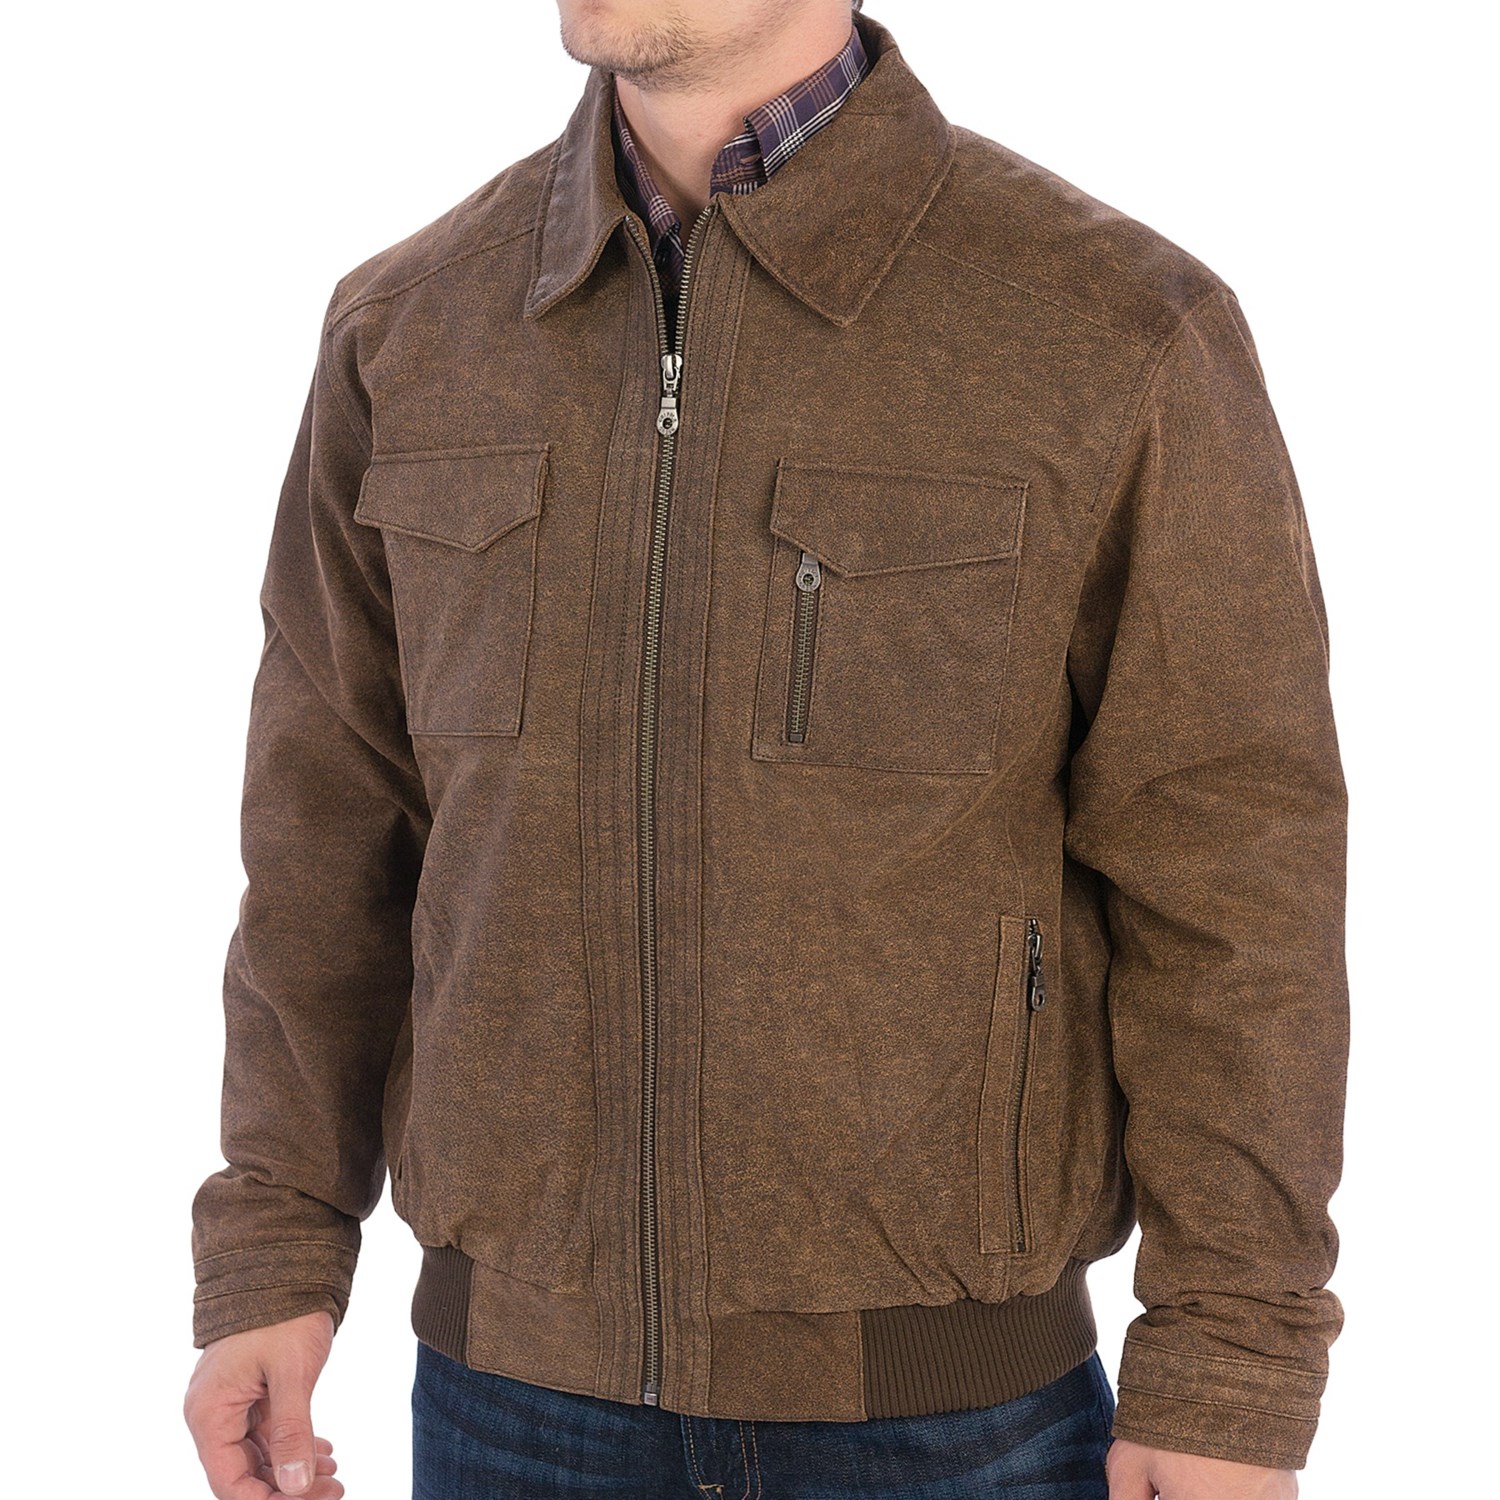 Cripple Creek Leather Jacket (For Men) 8809N - Save 45%